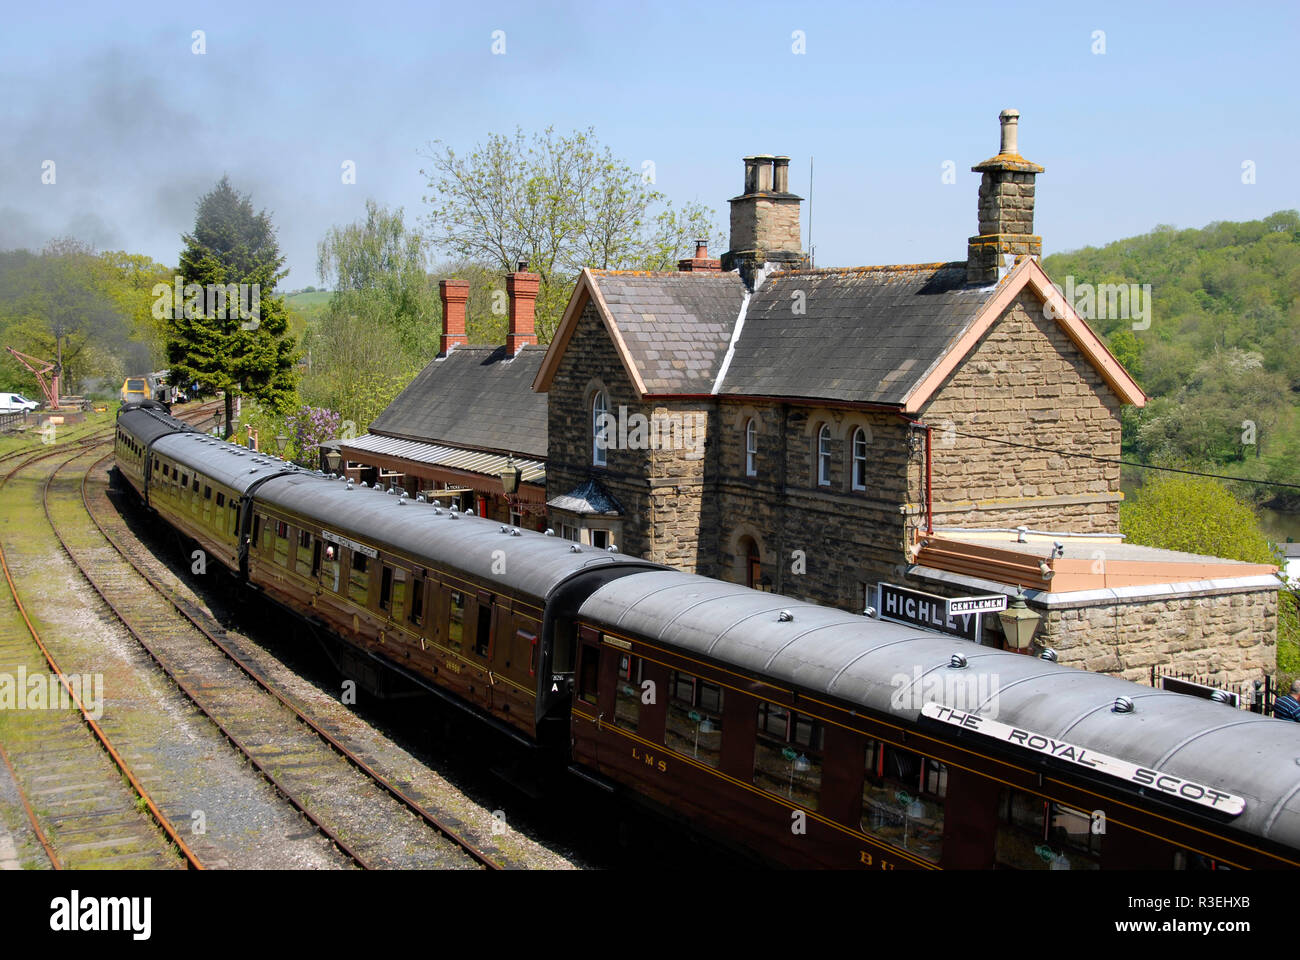 The Royal Scot train at Highley railway station, Shropshire, England. Stock Photo